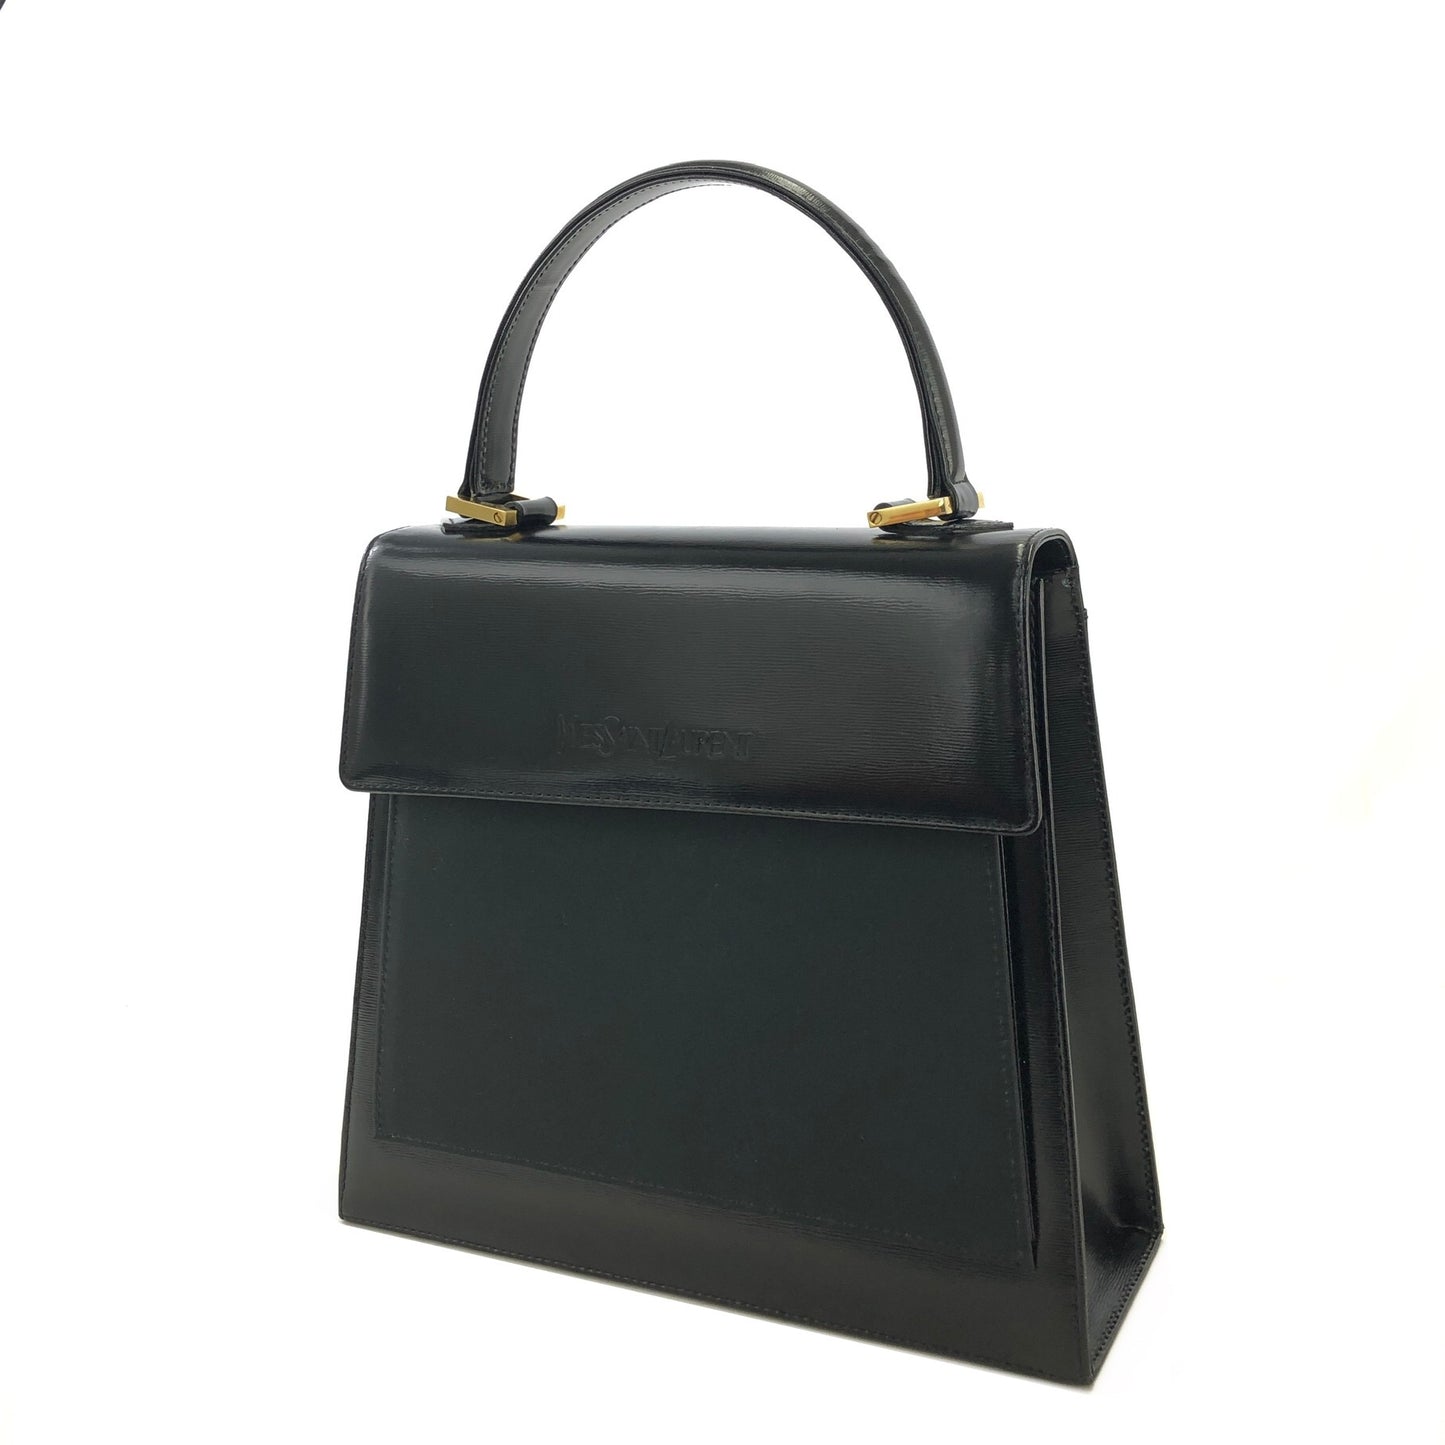 Yves Saint Laurent Logo Nylon Leather Top Handle Handbag Black Vintage w3hmrm